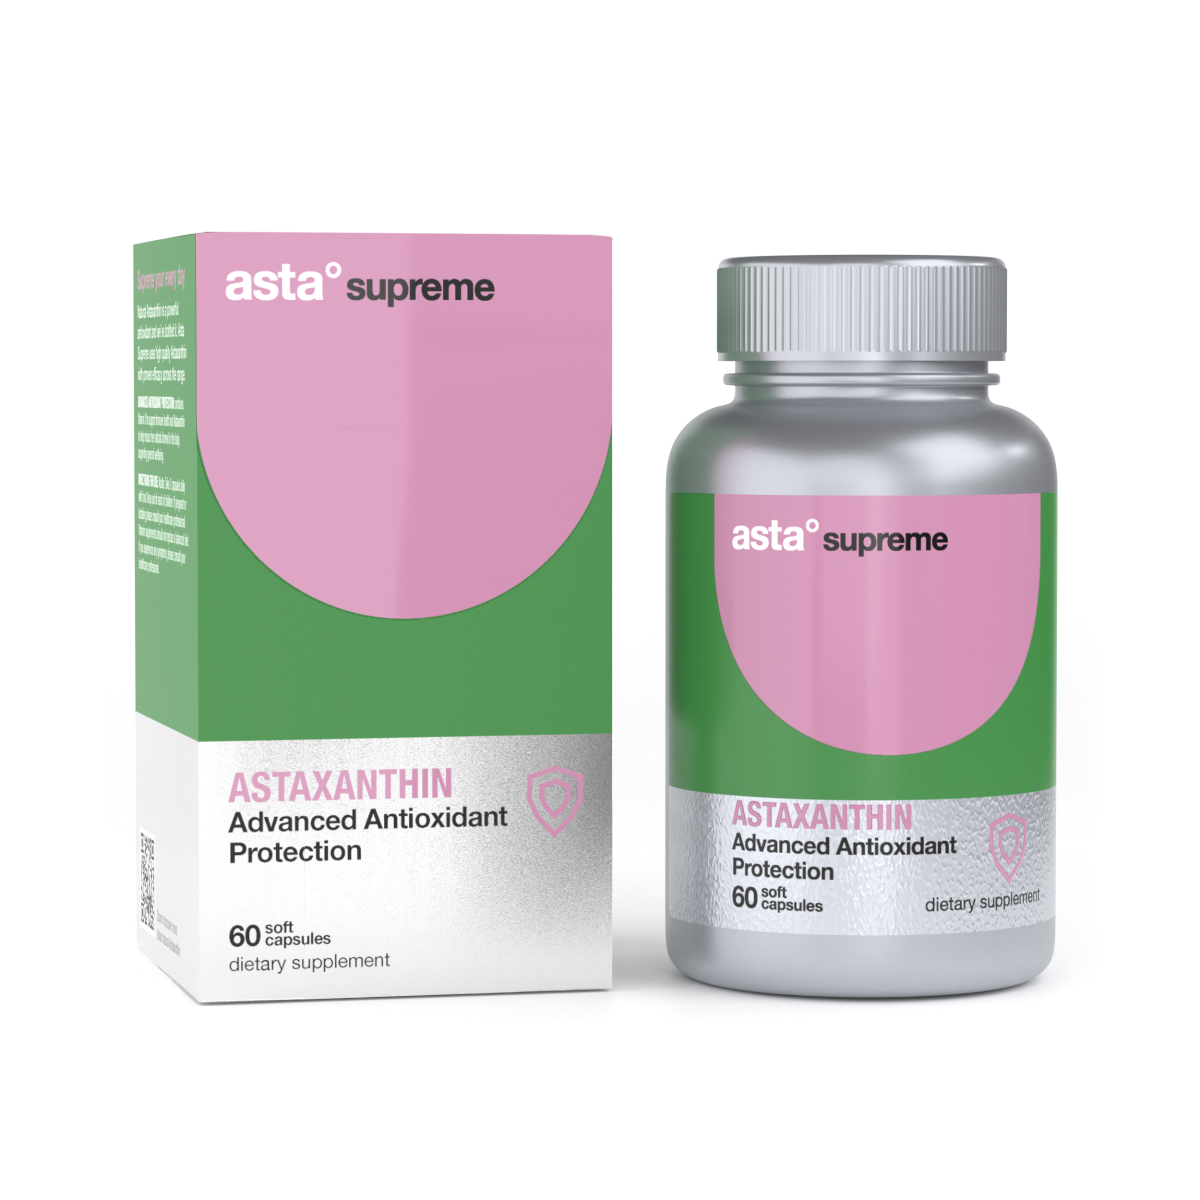 Asta Supreme Advanced Antioxidant Protection 60 Soft Capsules